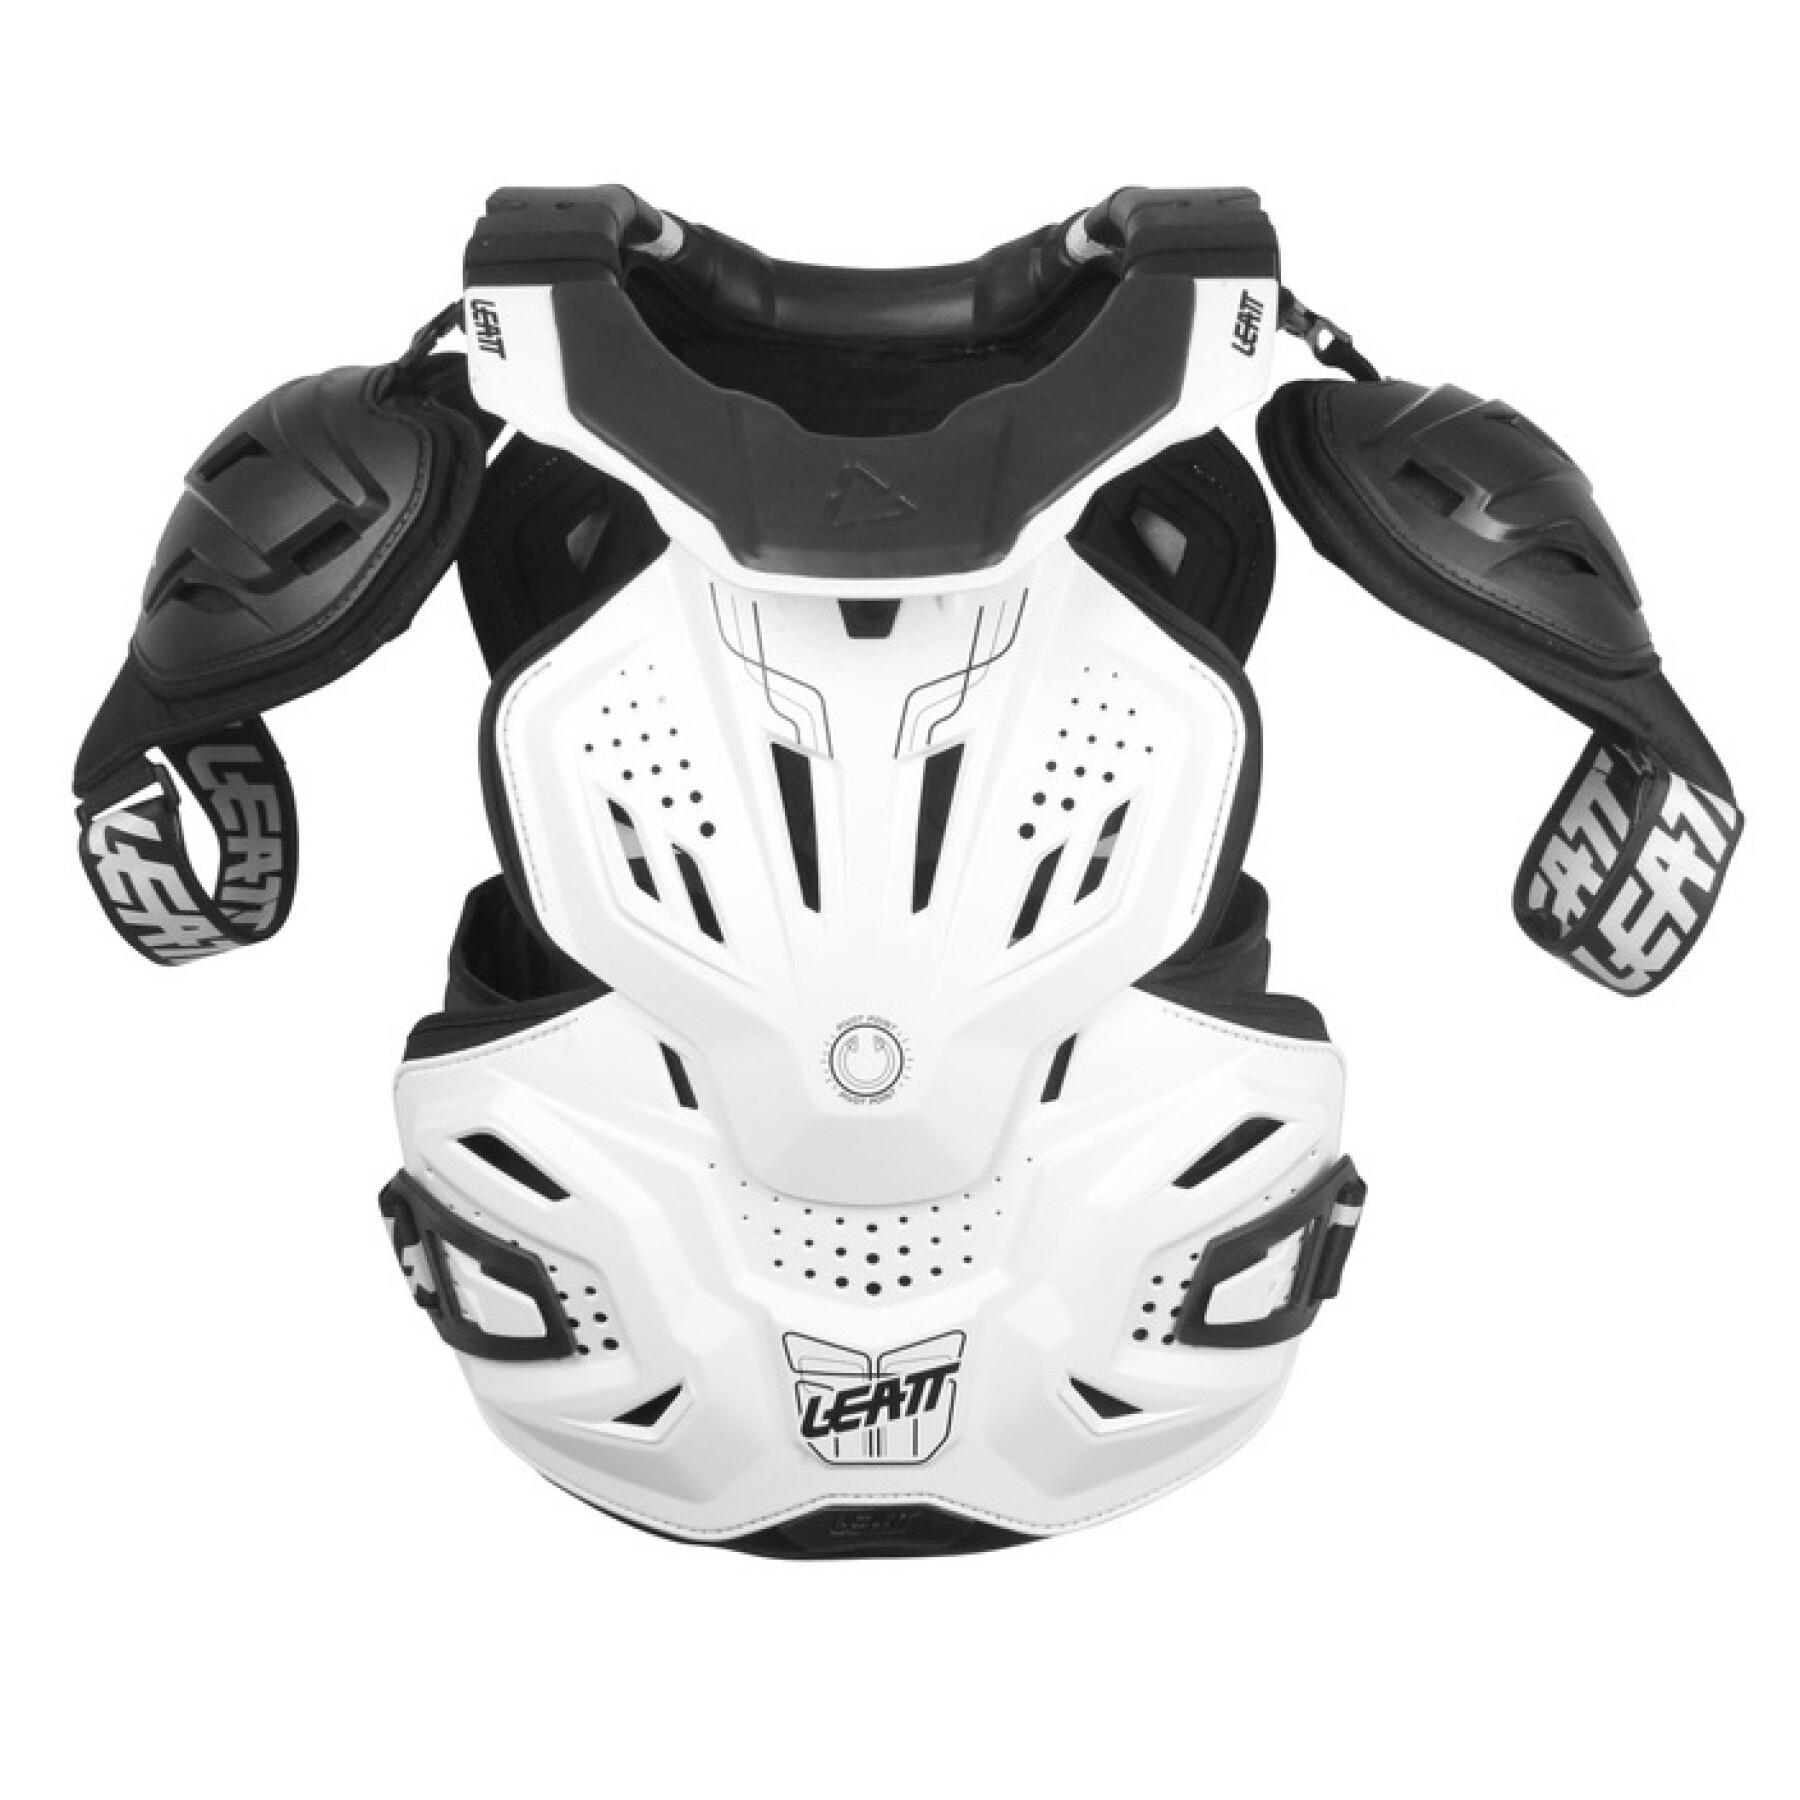 Motorcycle jacket Leatt Fusion 3,0